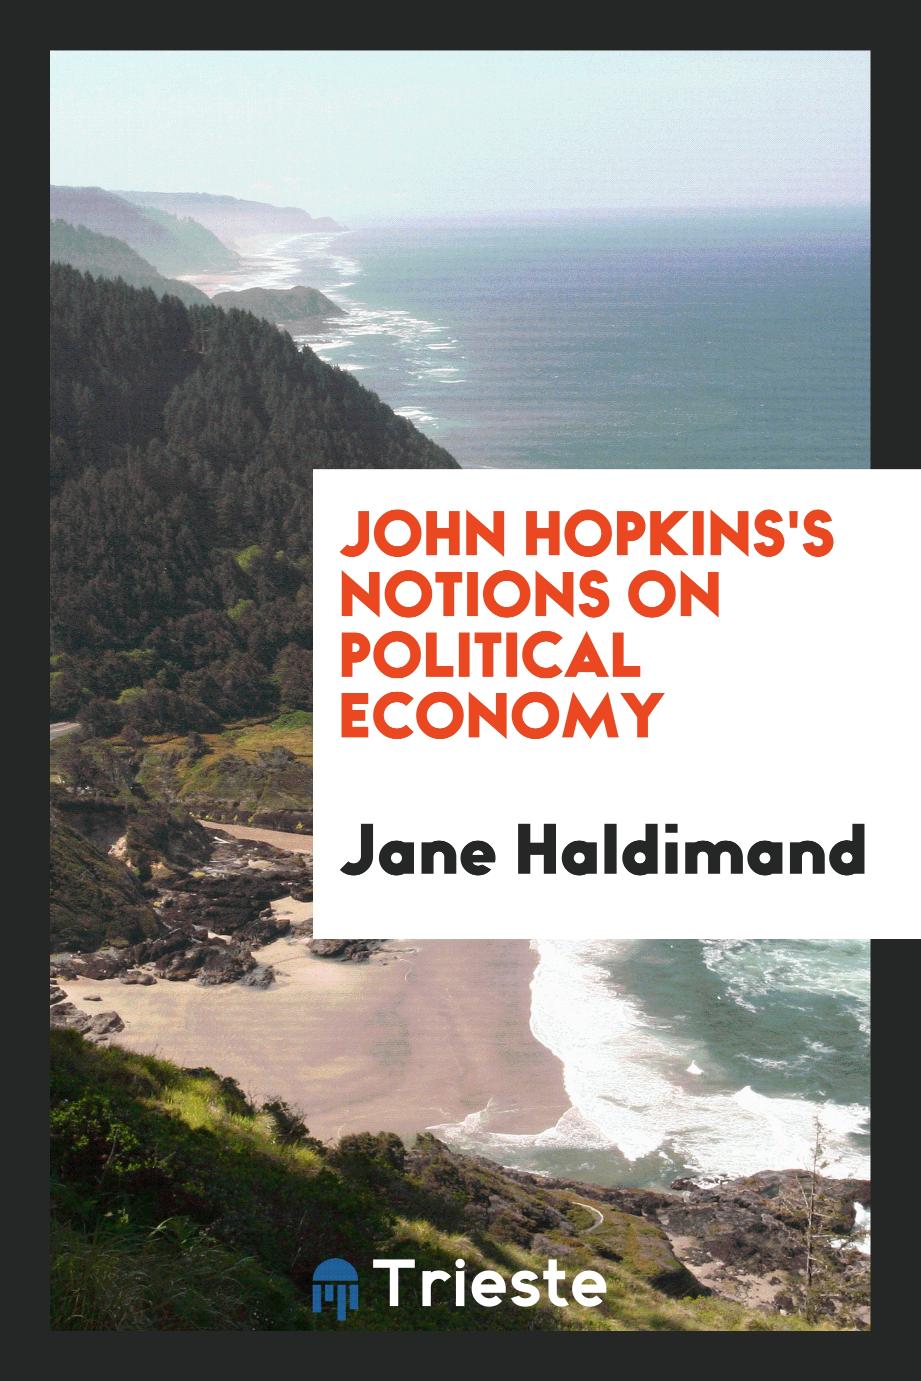 John Hopkins's notions on political economy